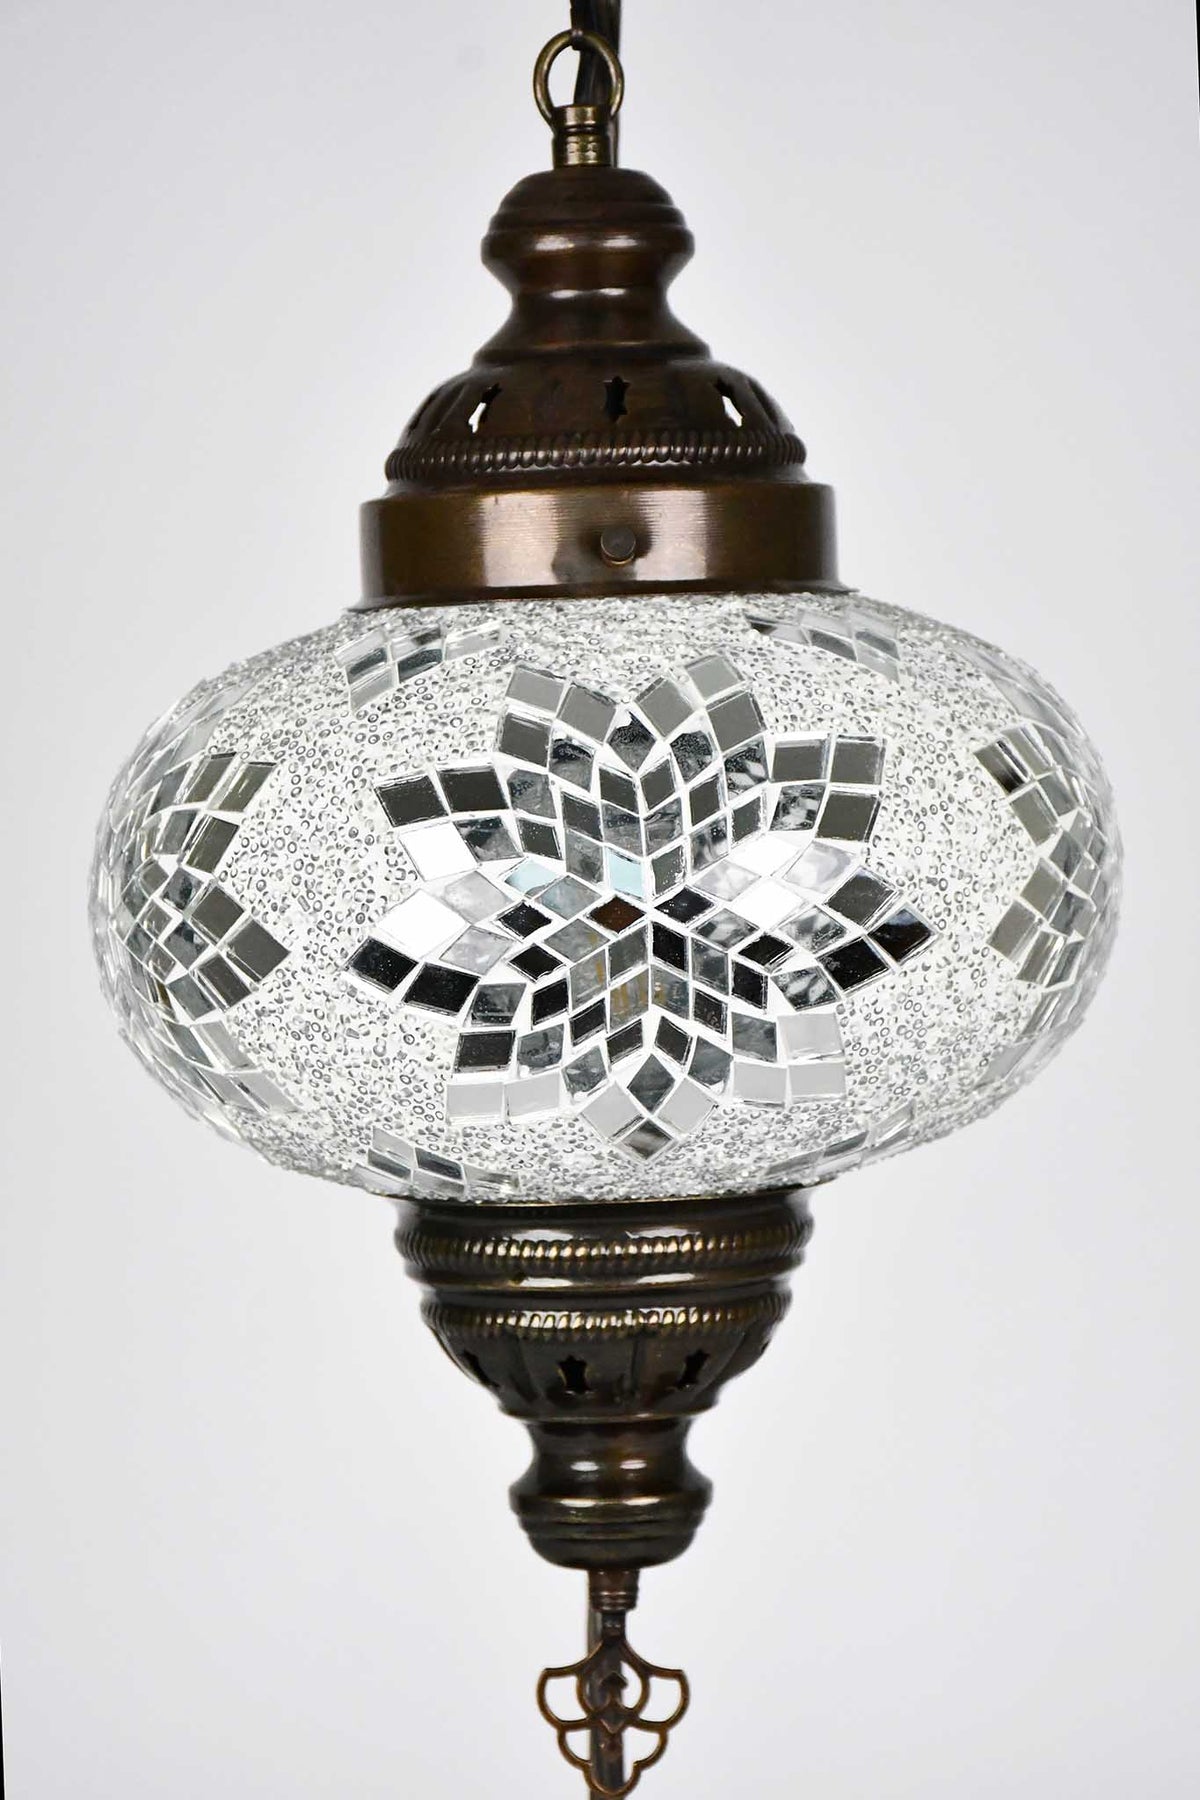 Turkish Lamp Large Clear White Star Design 1 Lighting Sydney Grand Bazaar 